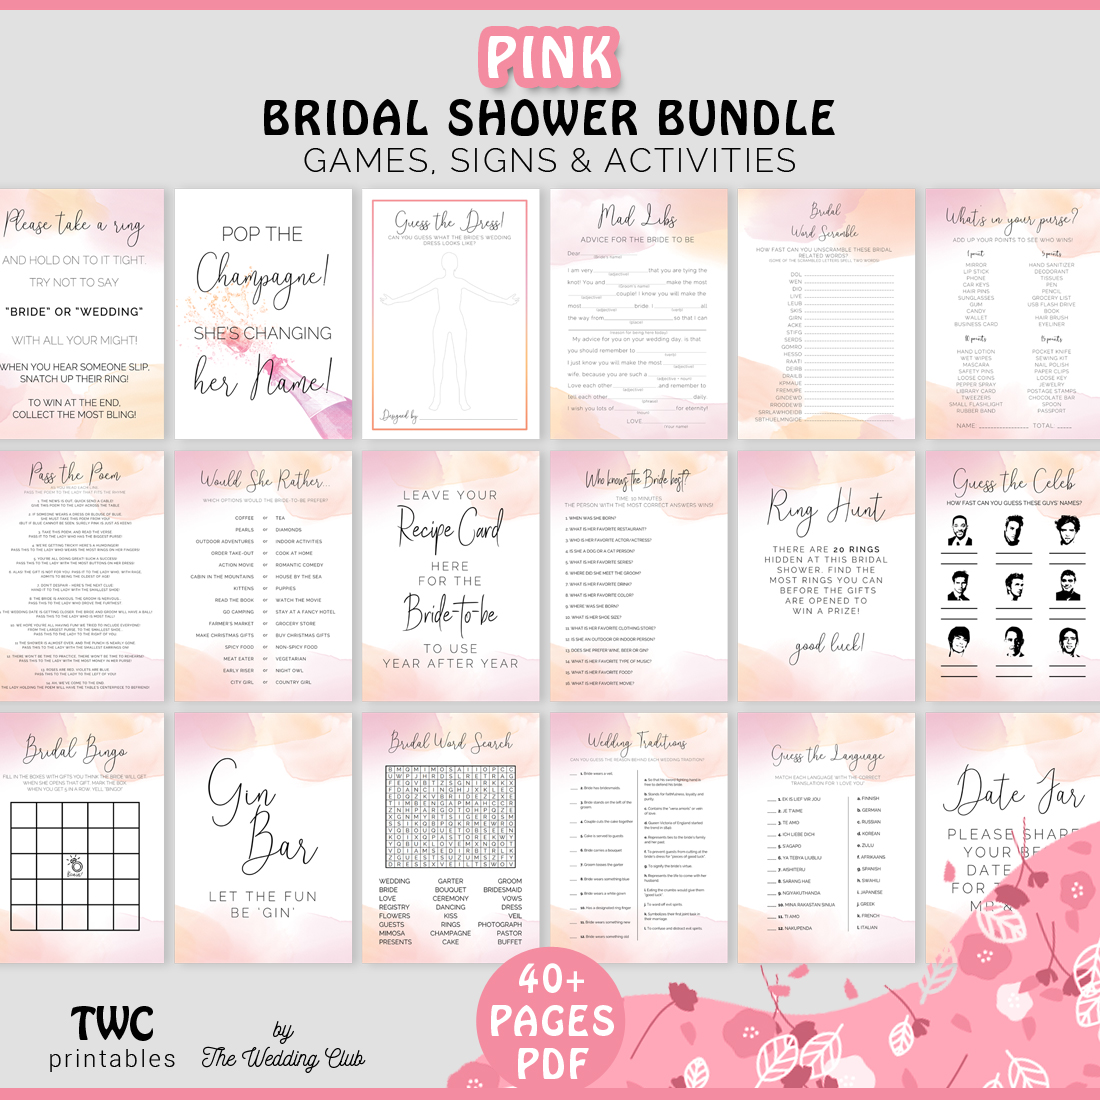 Pink bridal shower bundle - bridal shower games and activities